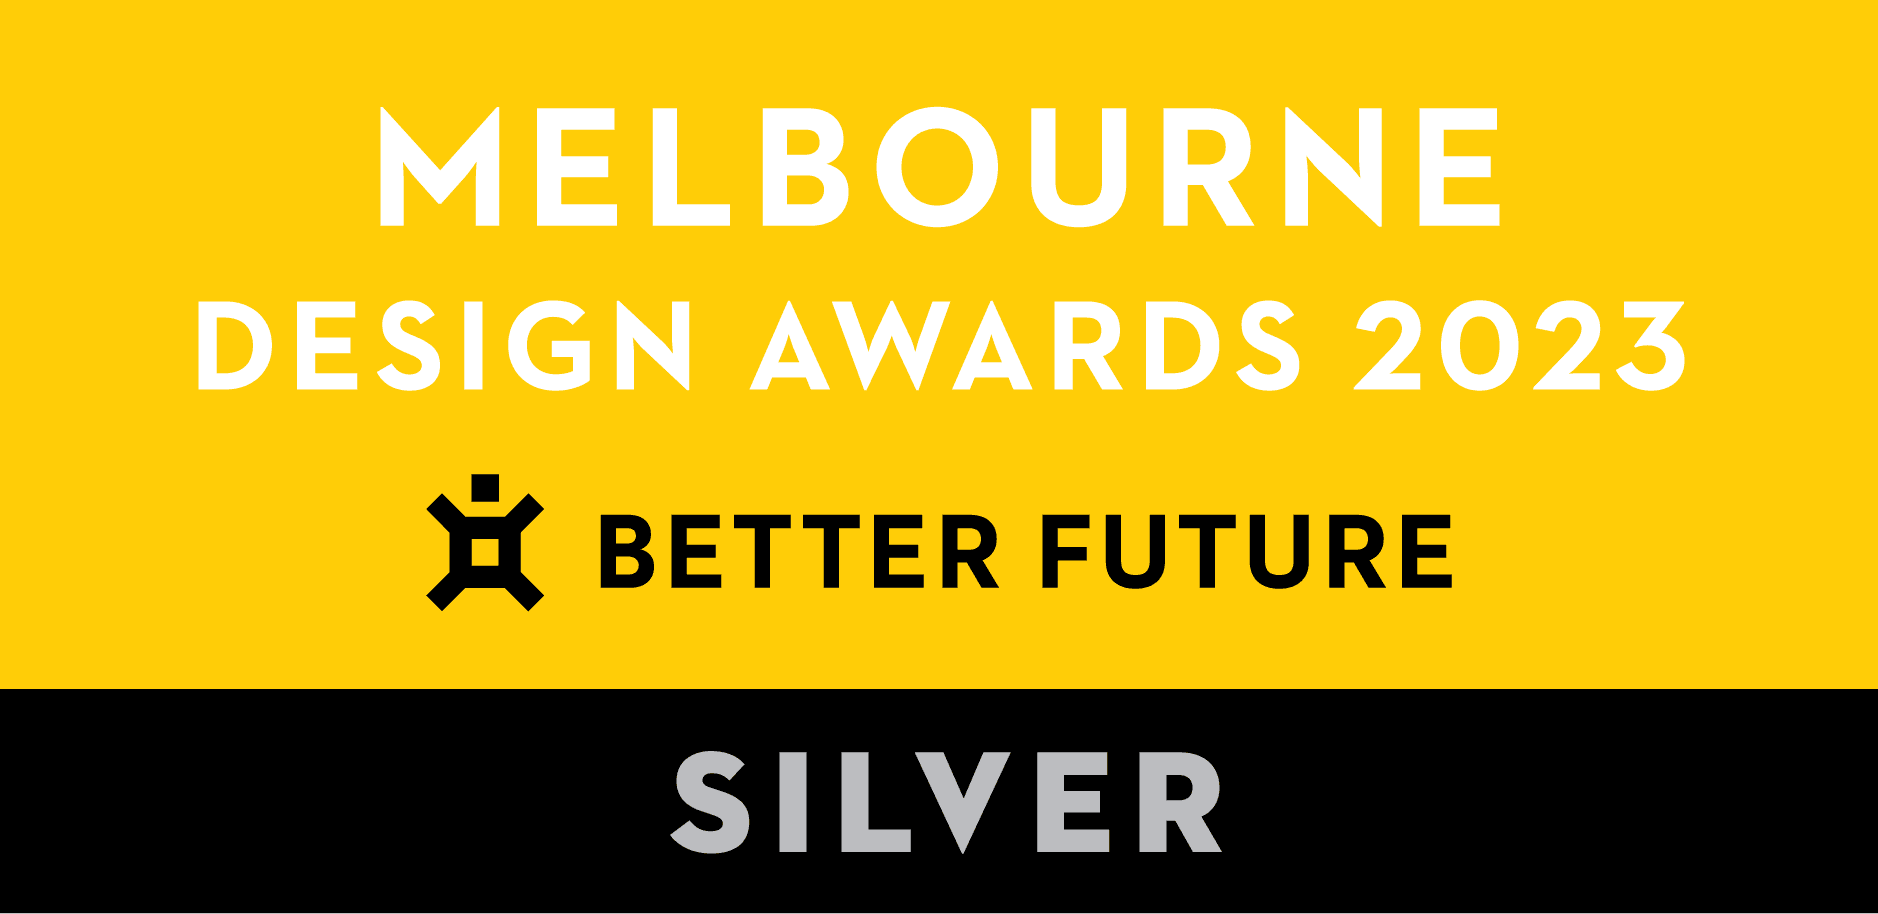 Fandelo awarded silver in the Better Future MELBOURNE Design Awards 2023